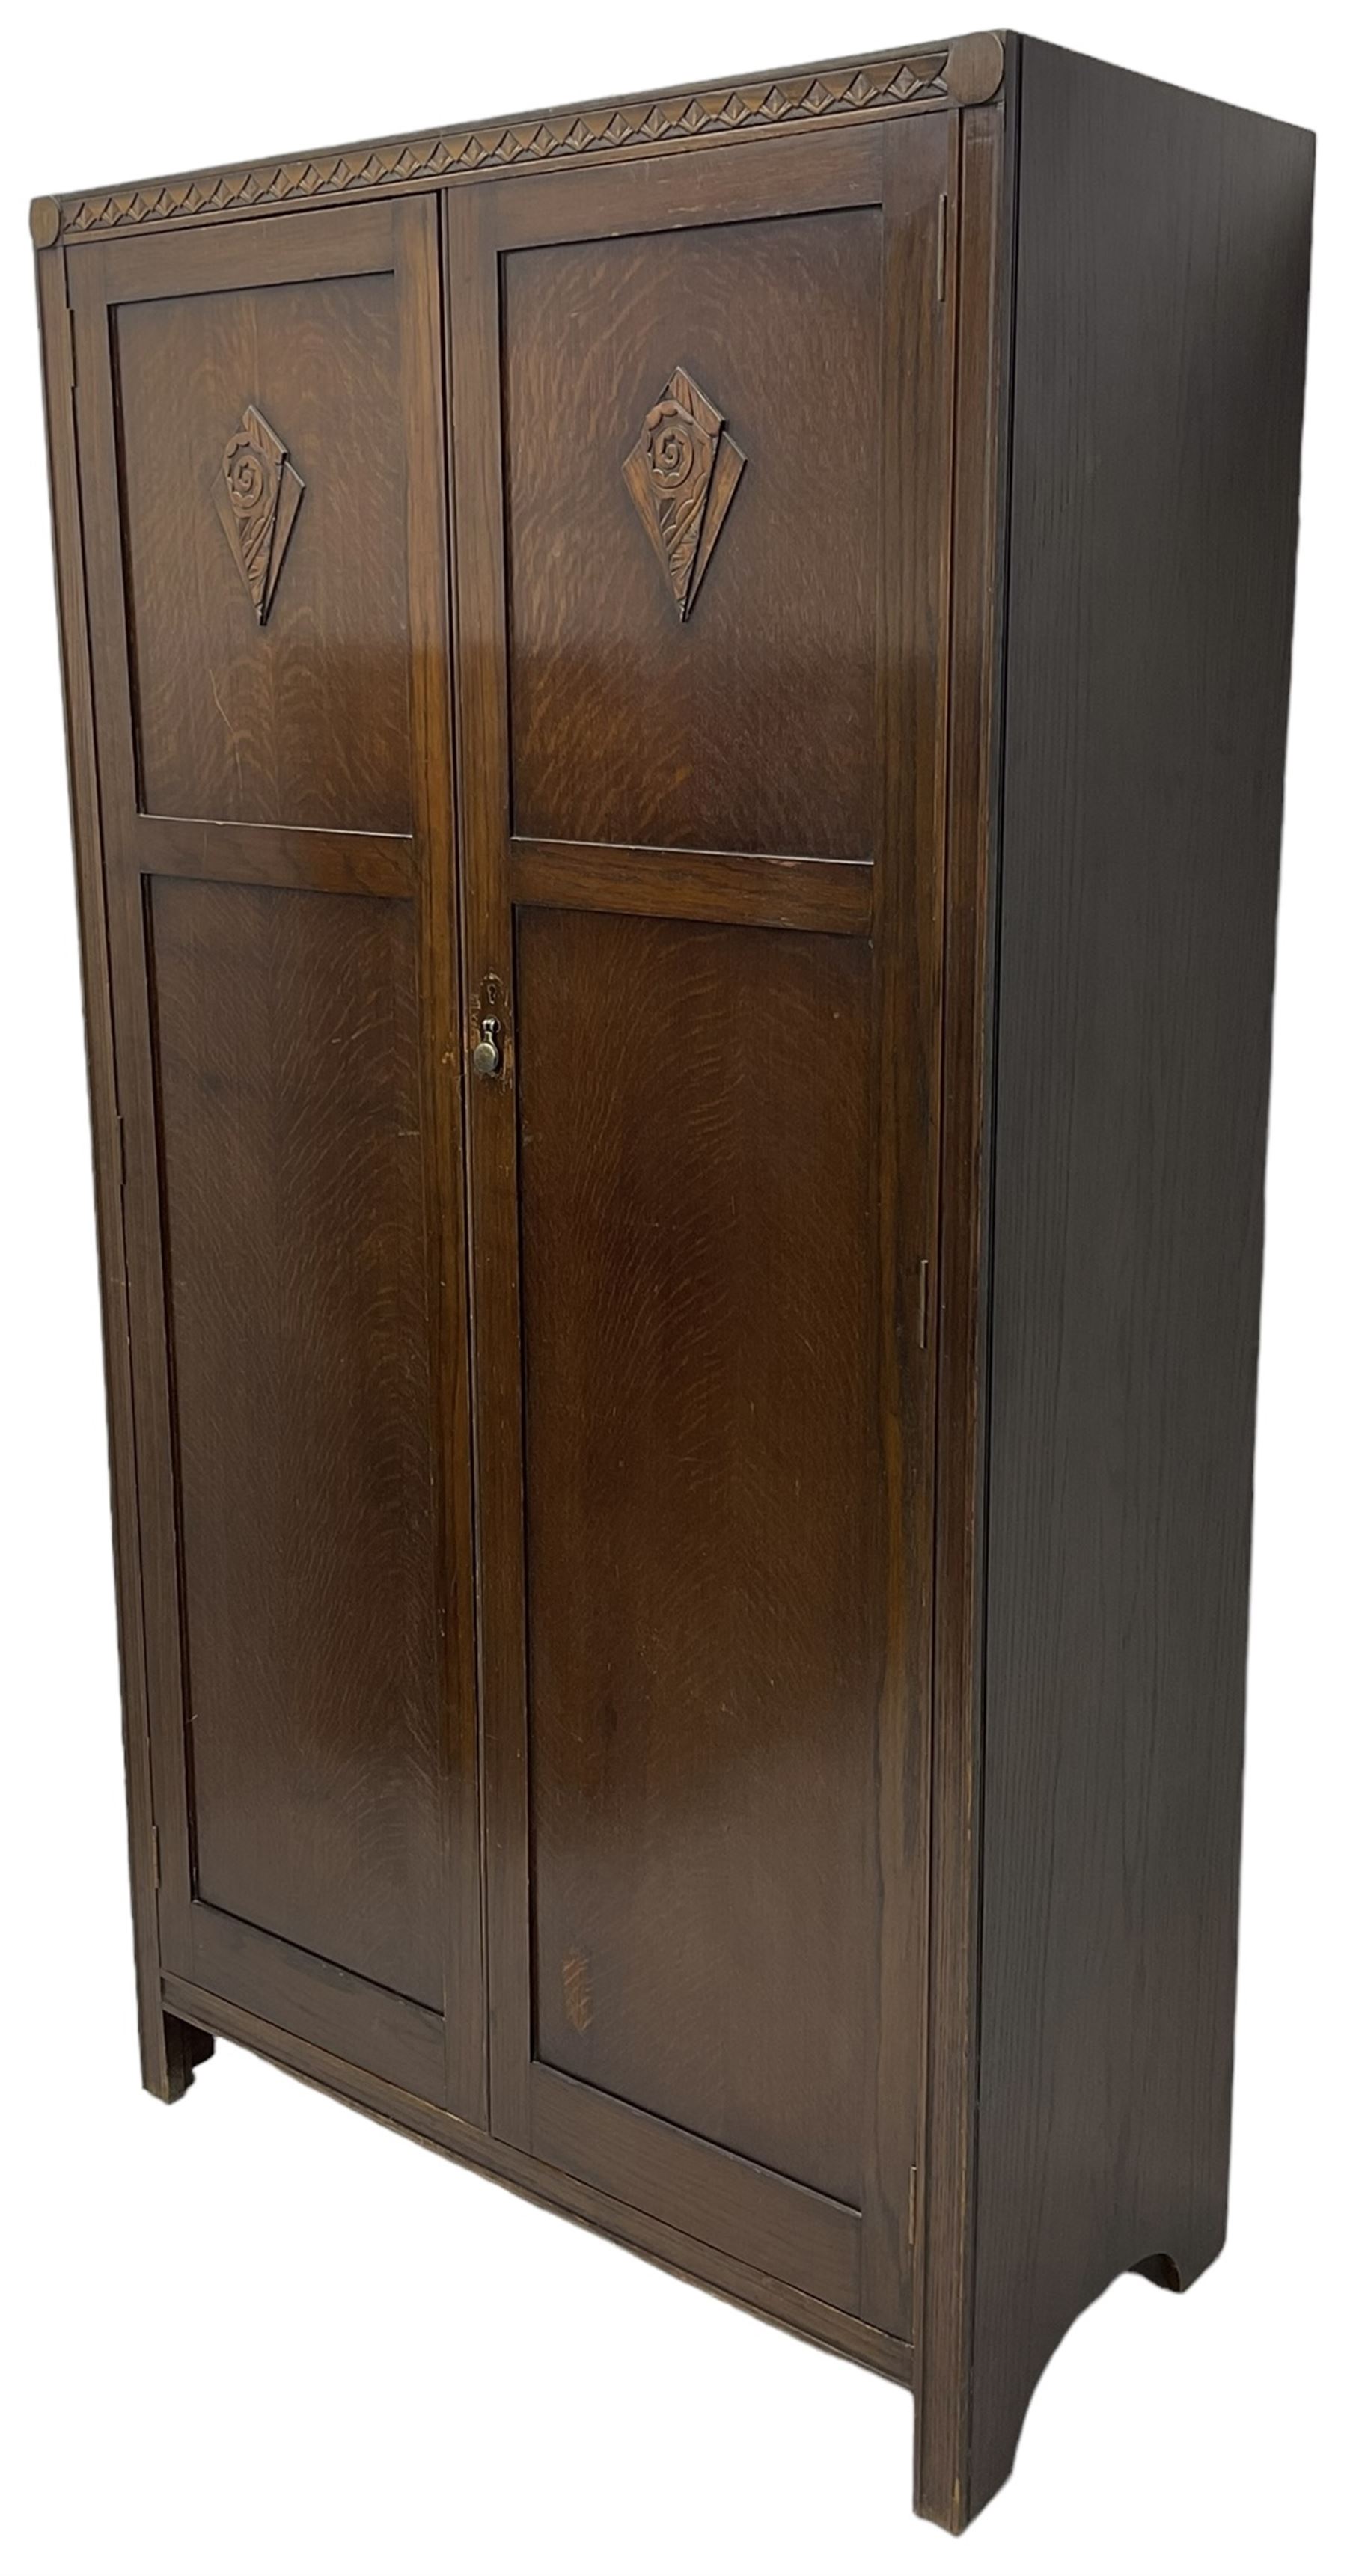 Mid-20th century oak wardrobe - Image 12 of 21